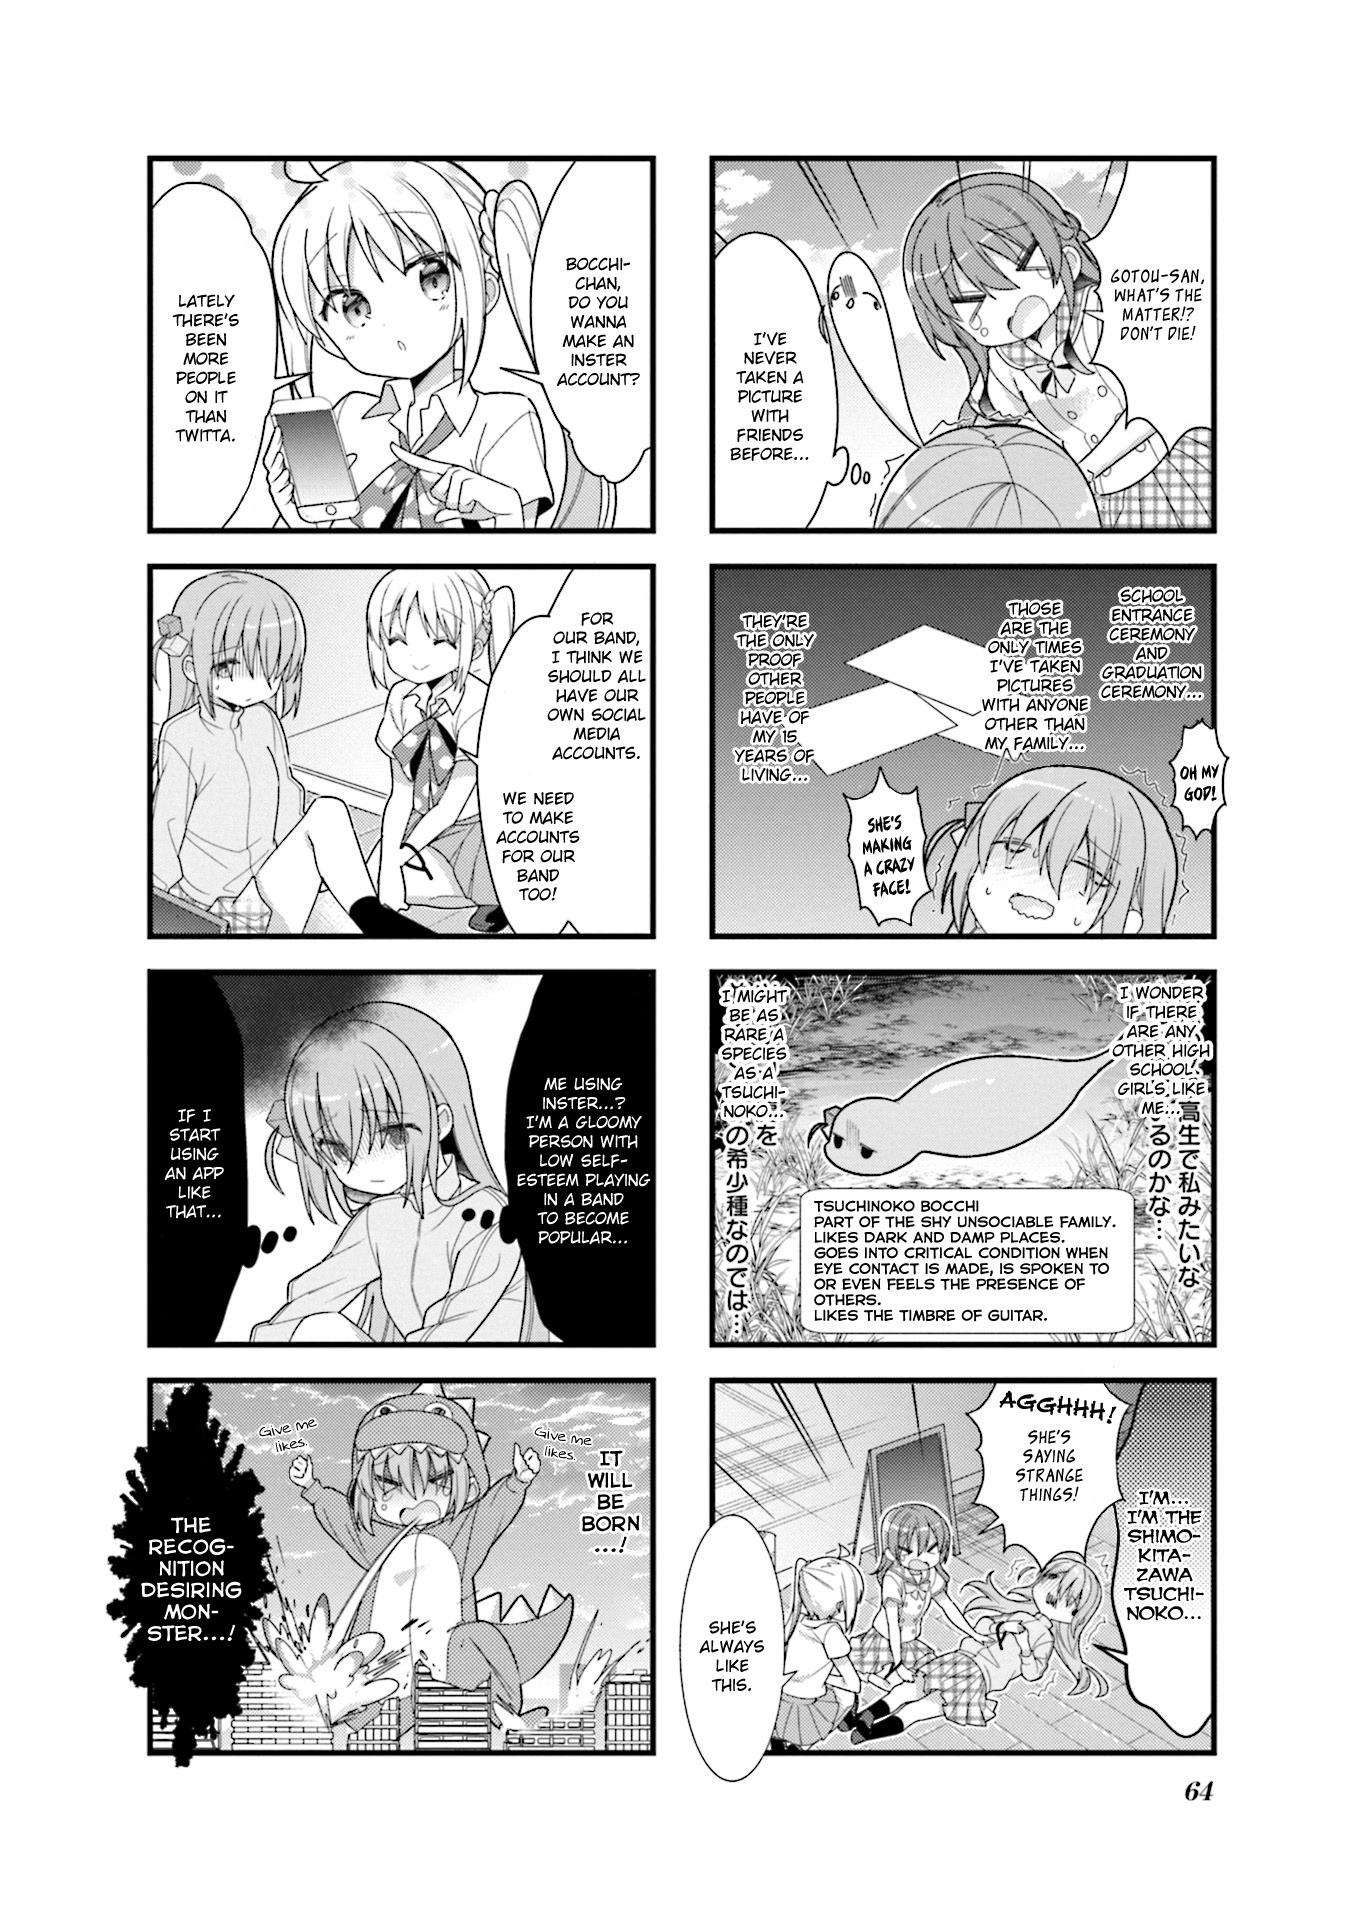 Bocchi the Rock! Ch.13 Page 6 - Mangago